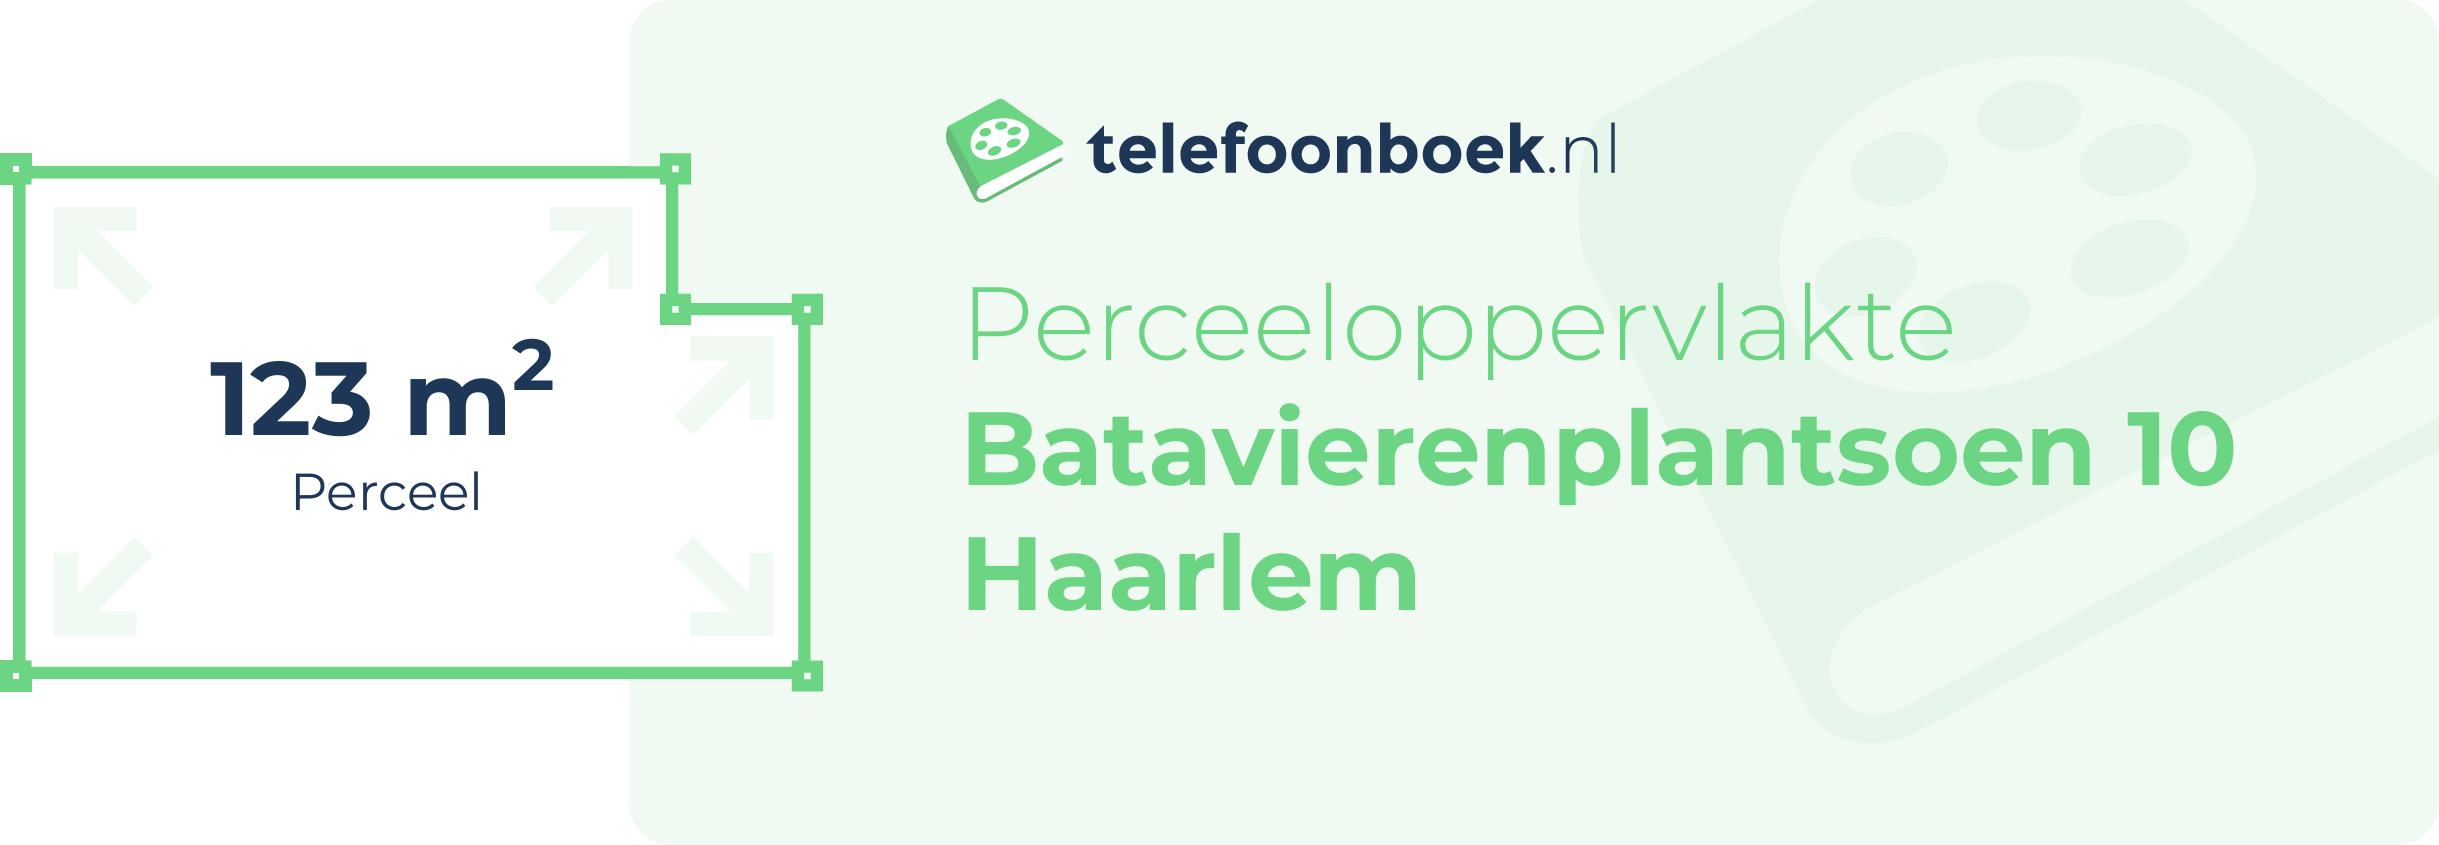 Perceeloppervlakte Batavierenplantsoen 10 Haarlem